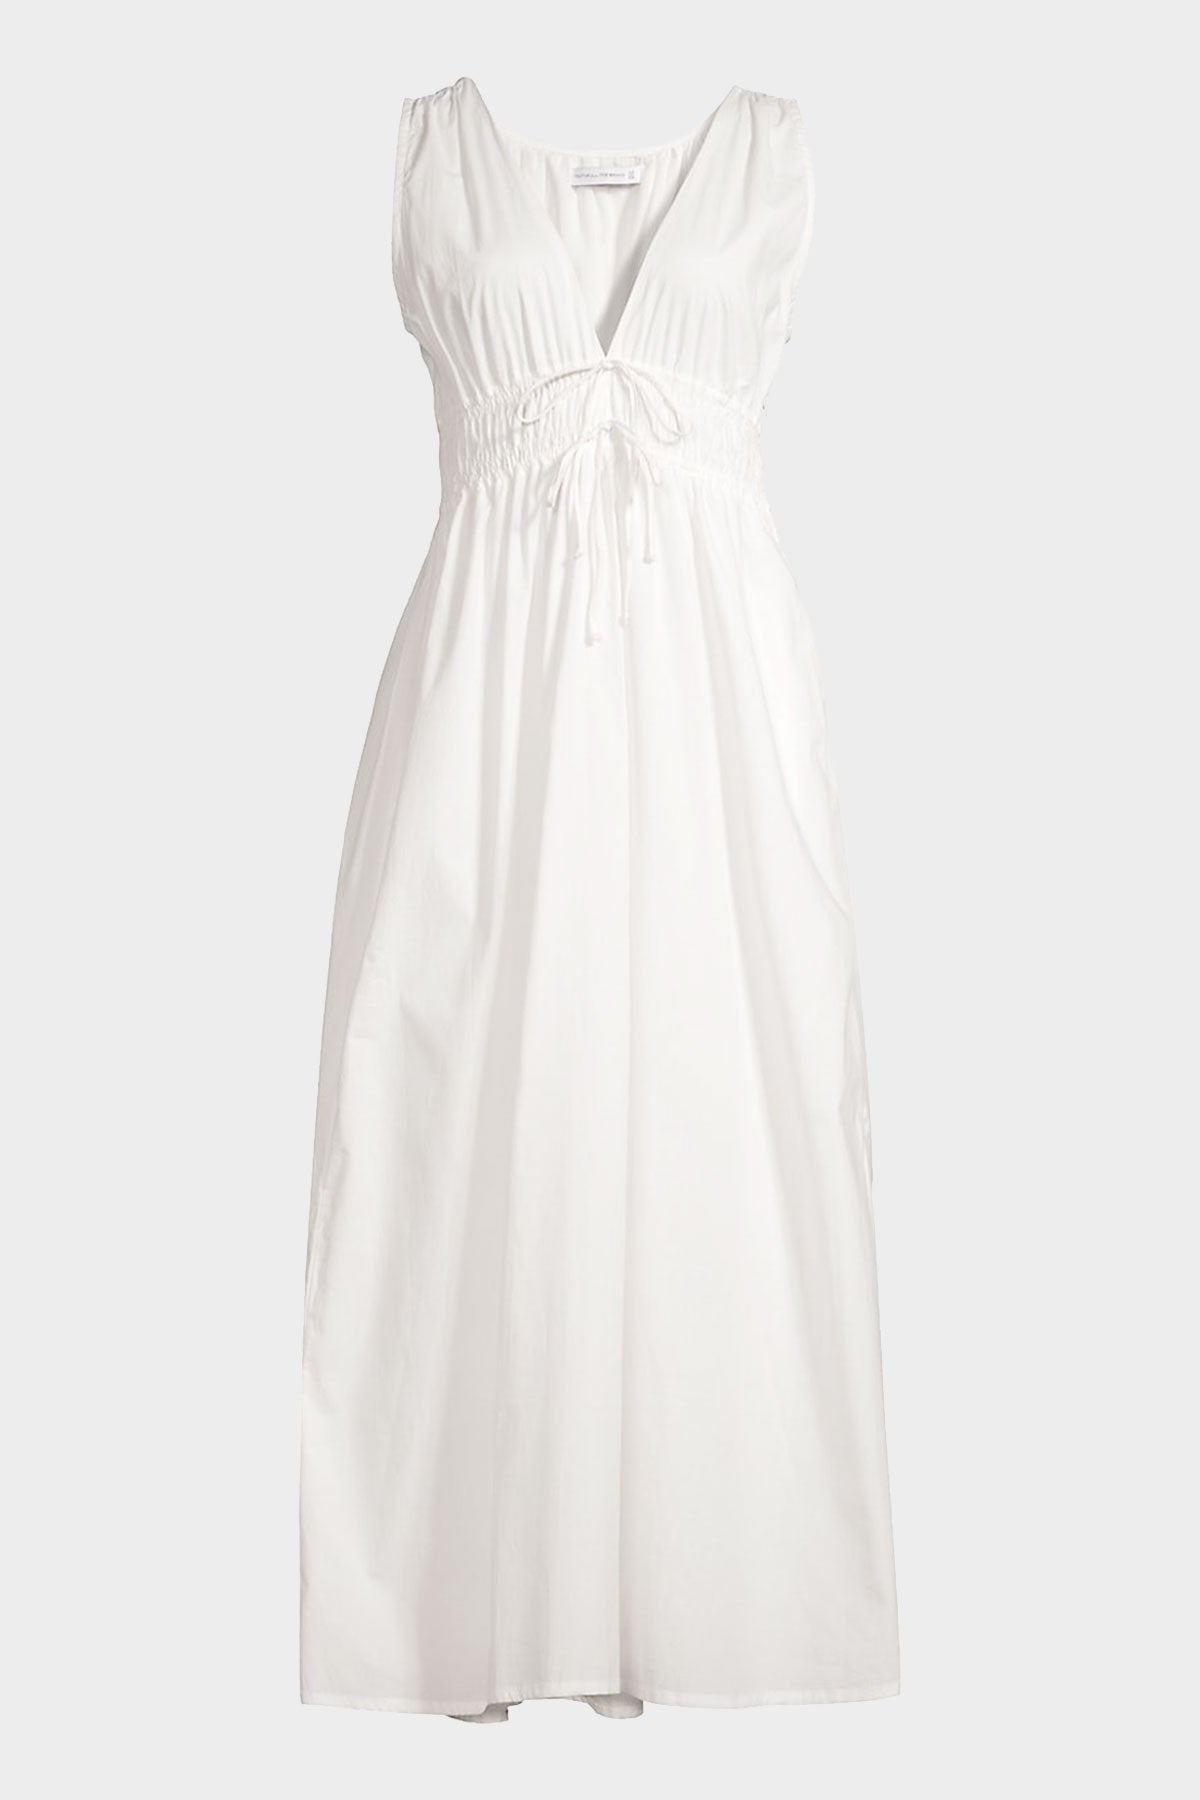 Les Lalanne Midi Dress in White - shop-olivia.com